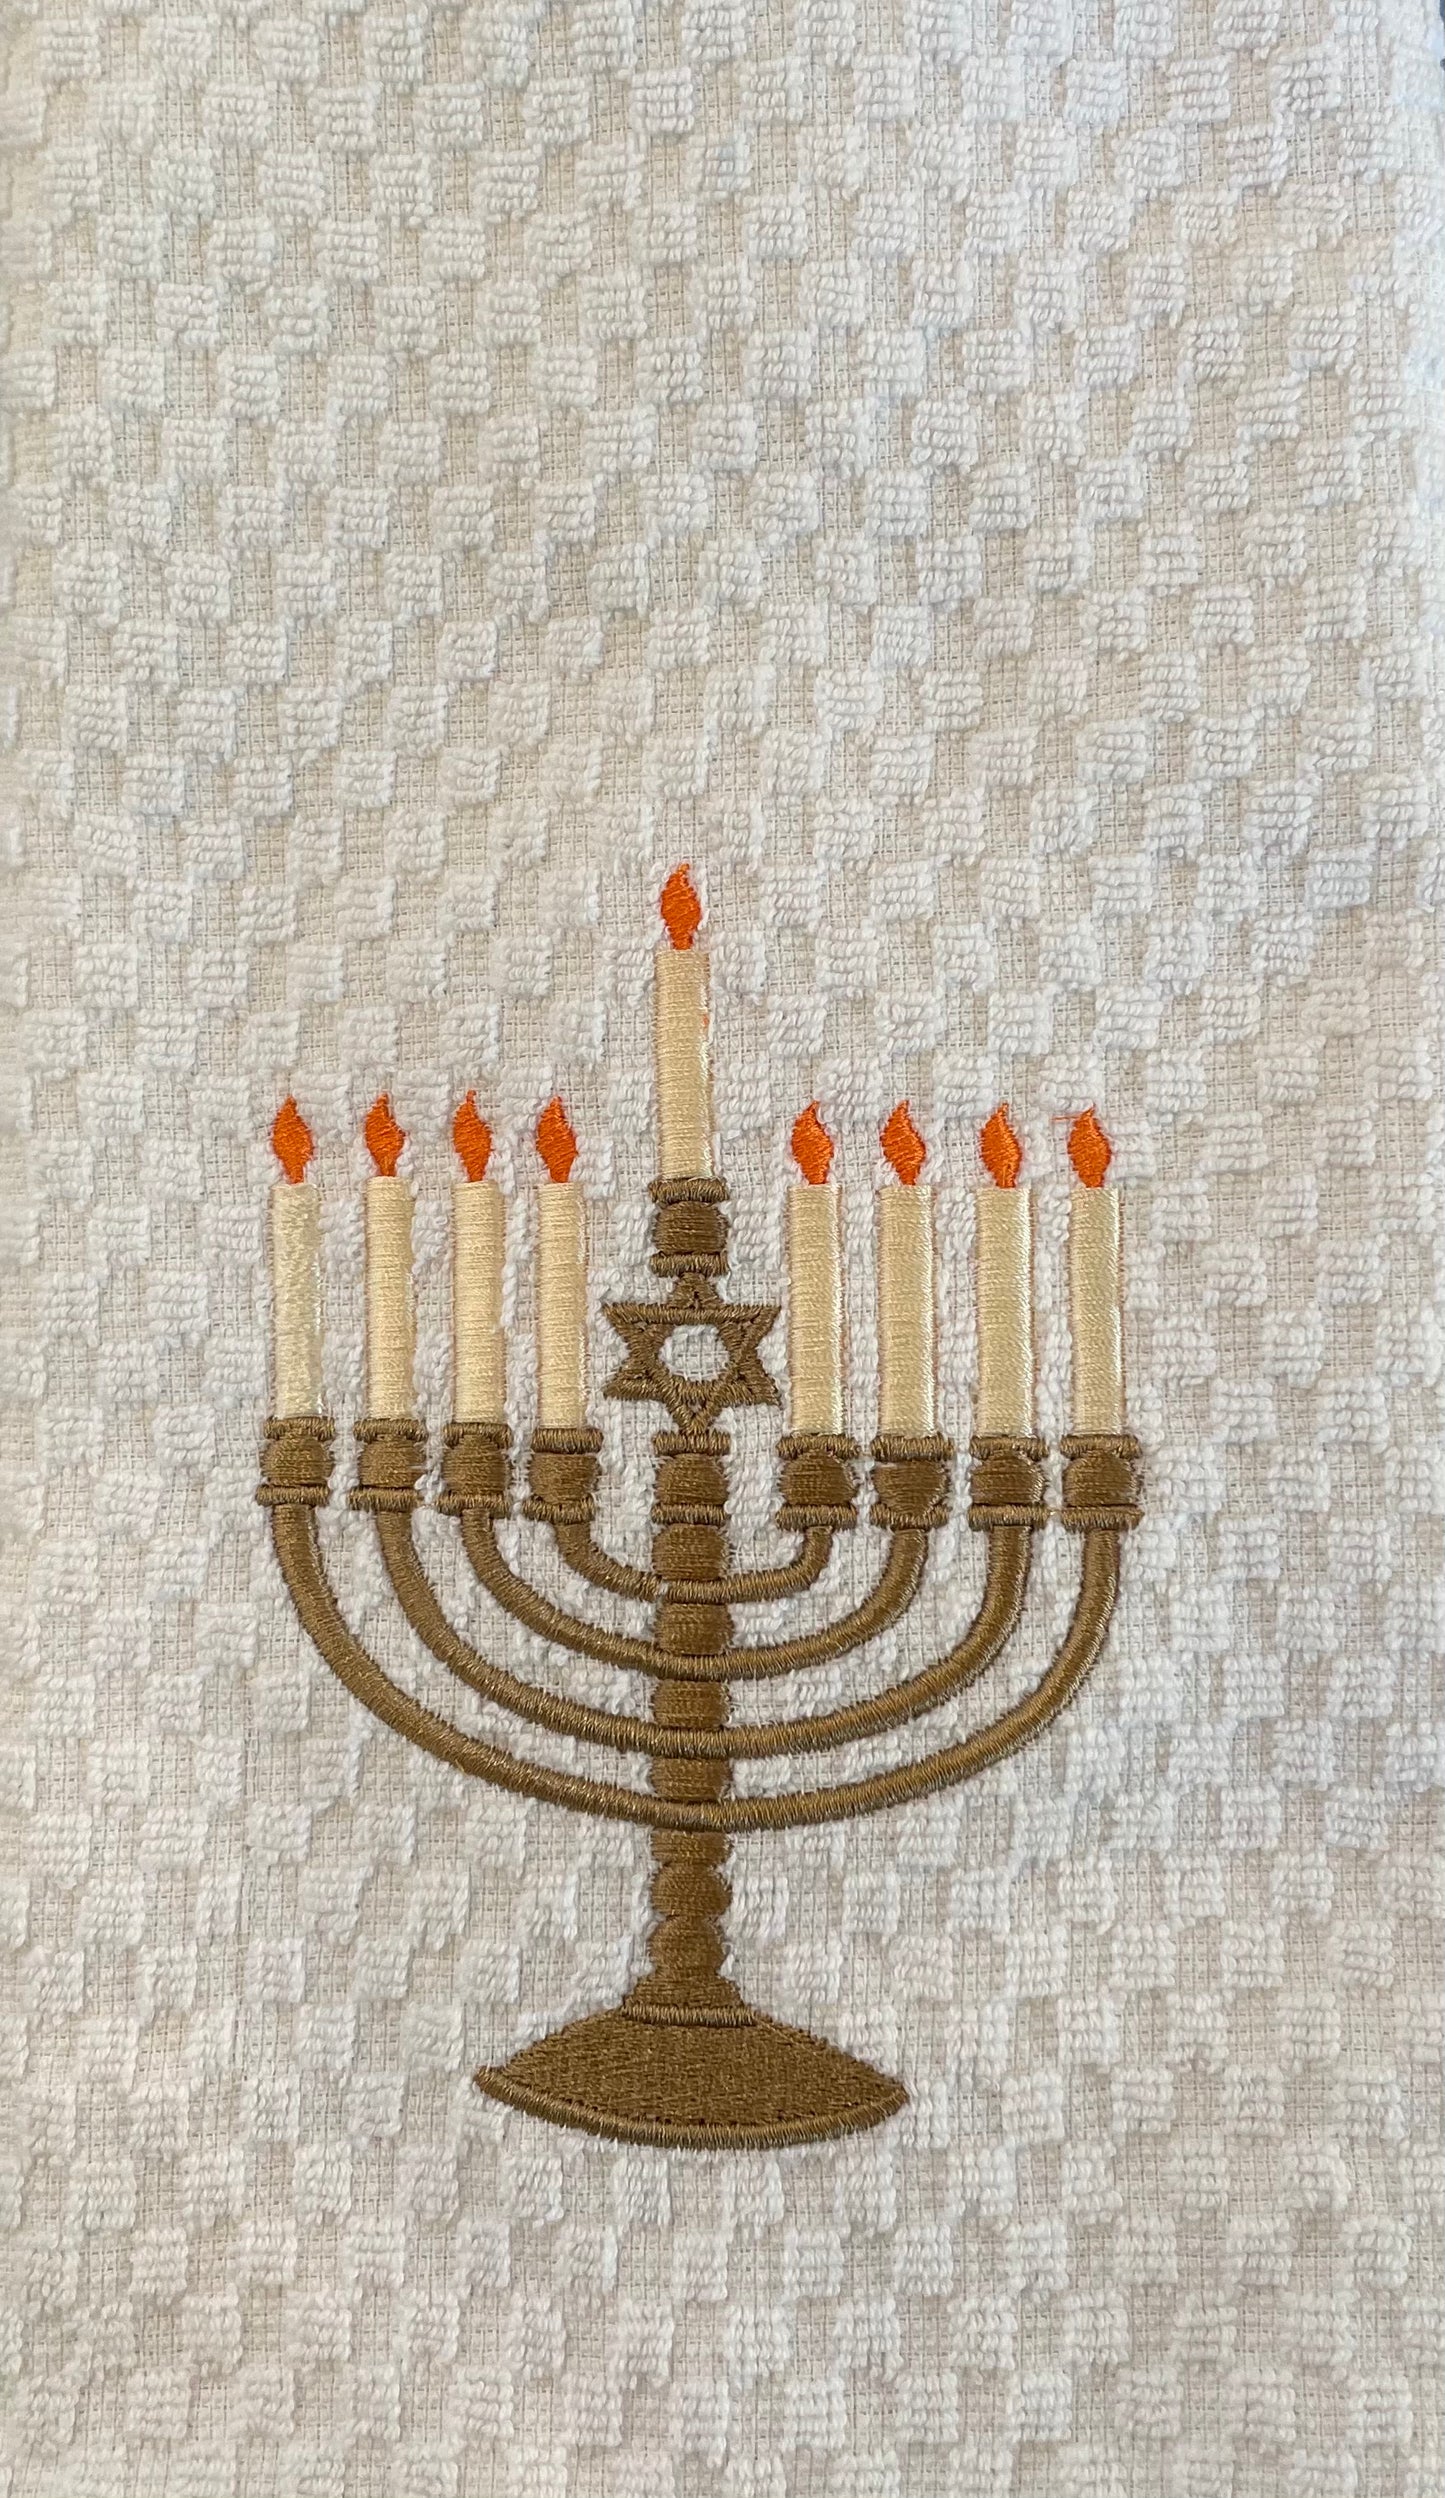 Embroidered Hanukkah Kitchen Towels